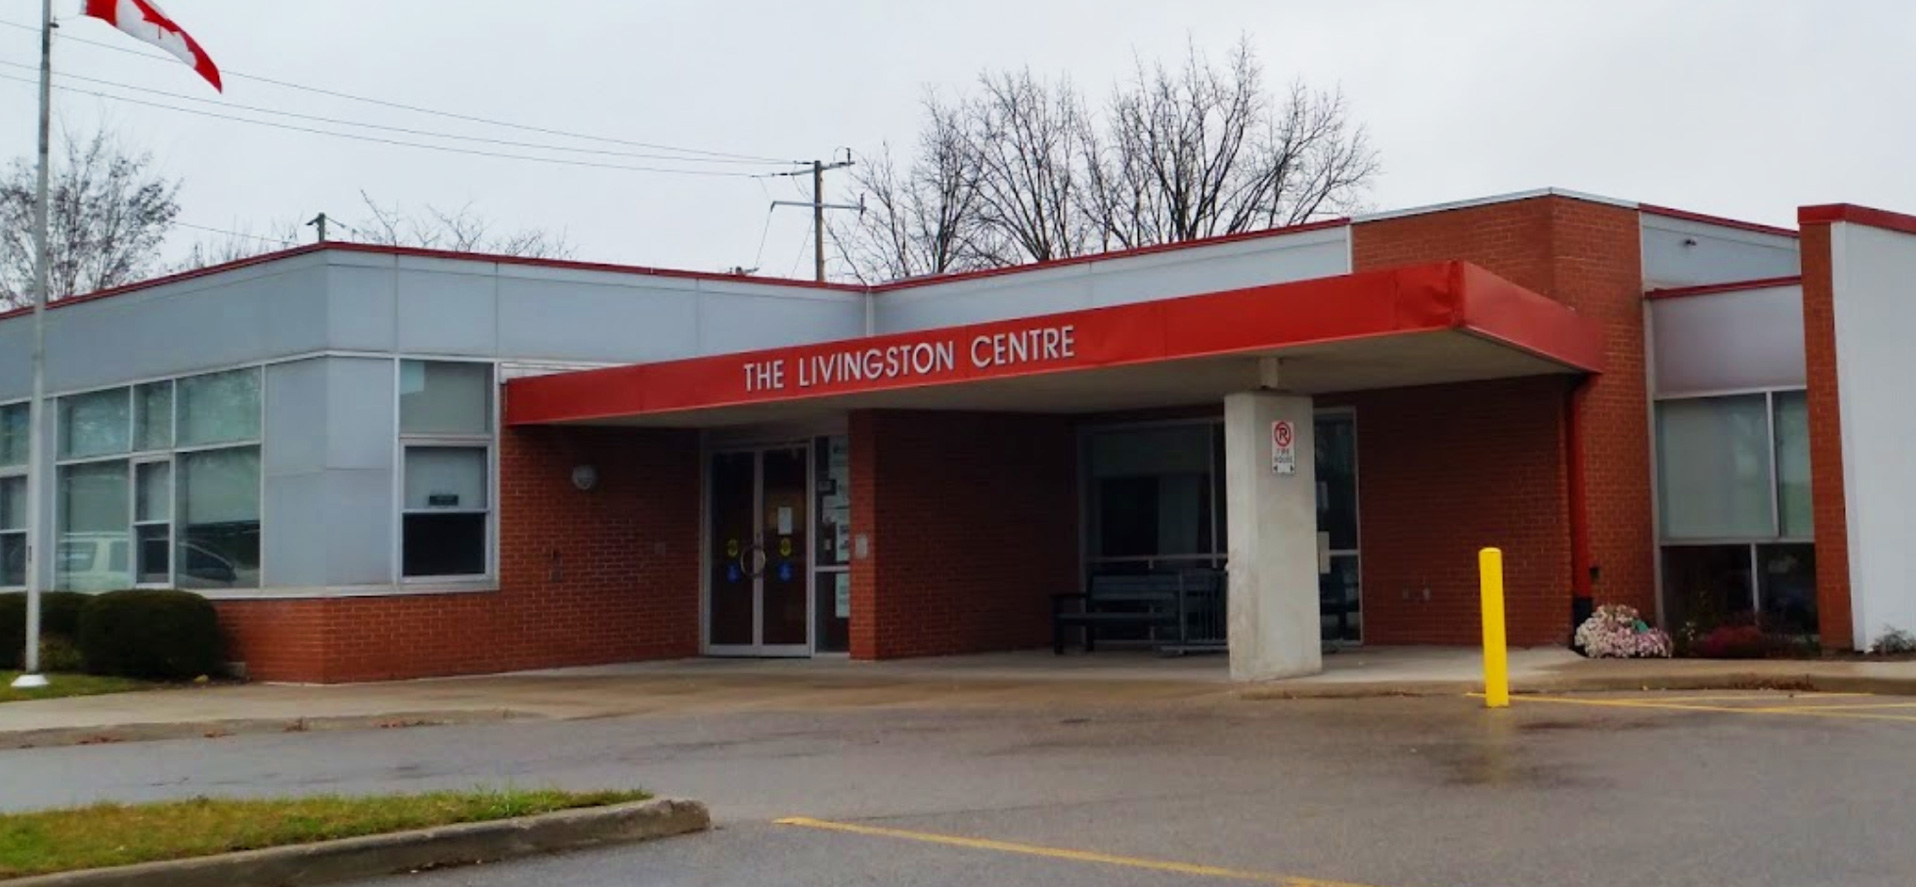 The Livingston Centre